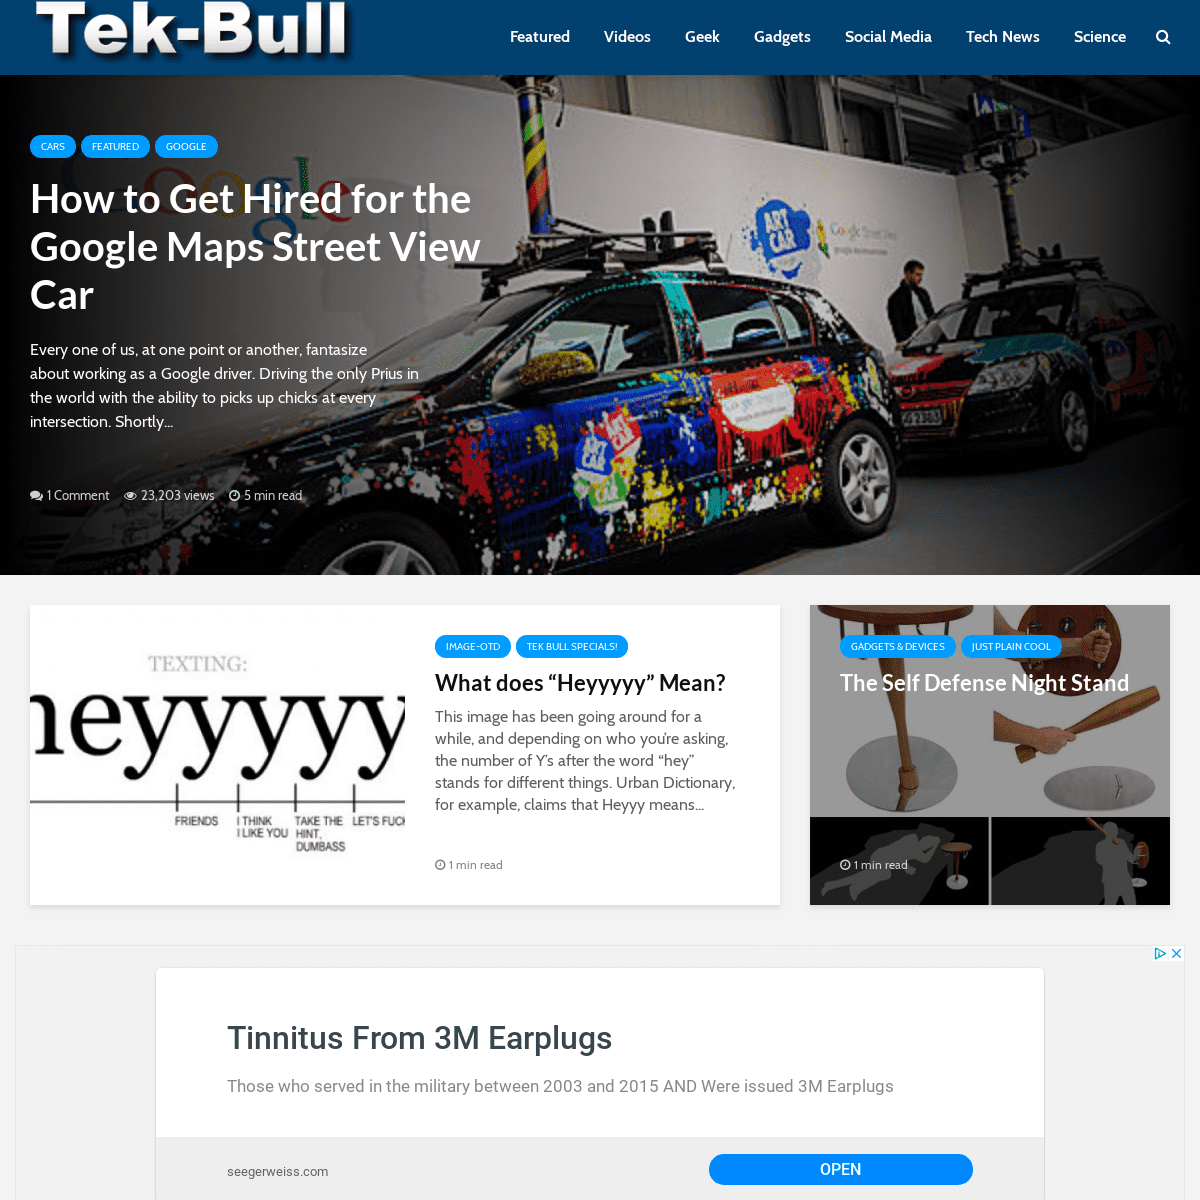 A complete backup of tek-bull.com